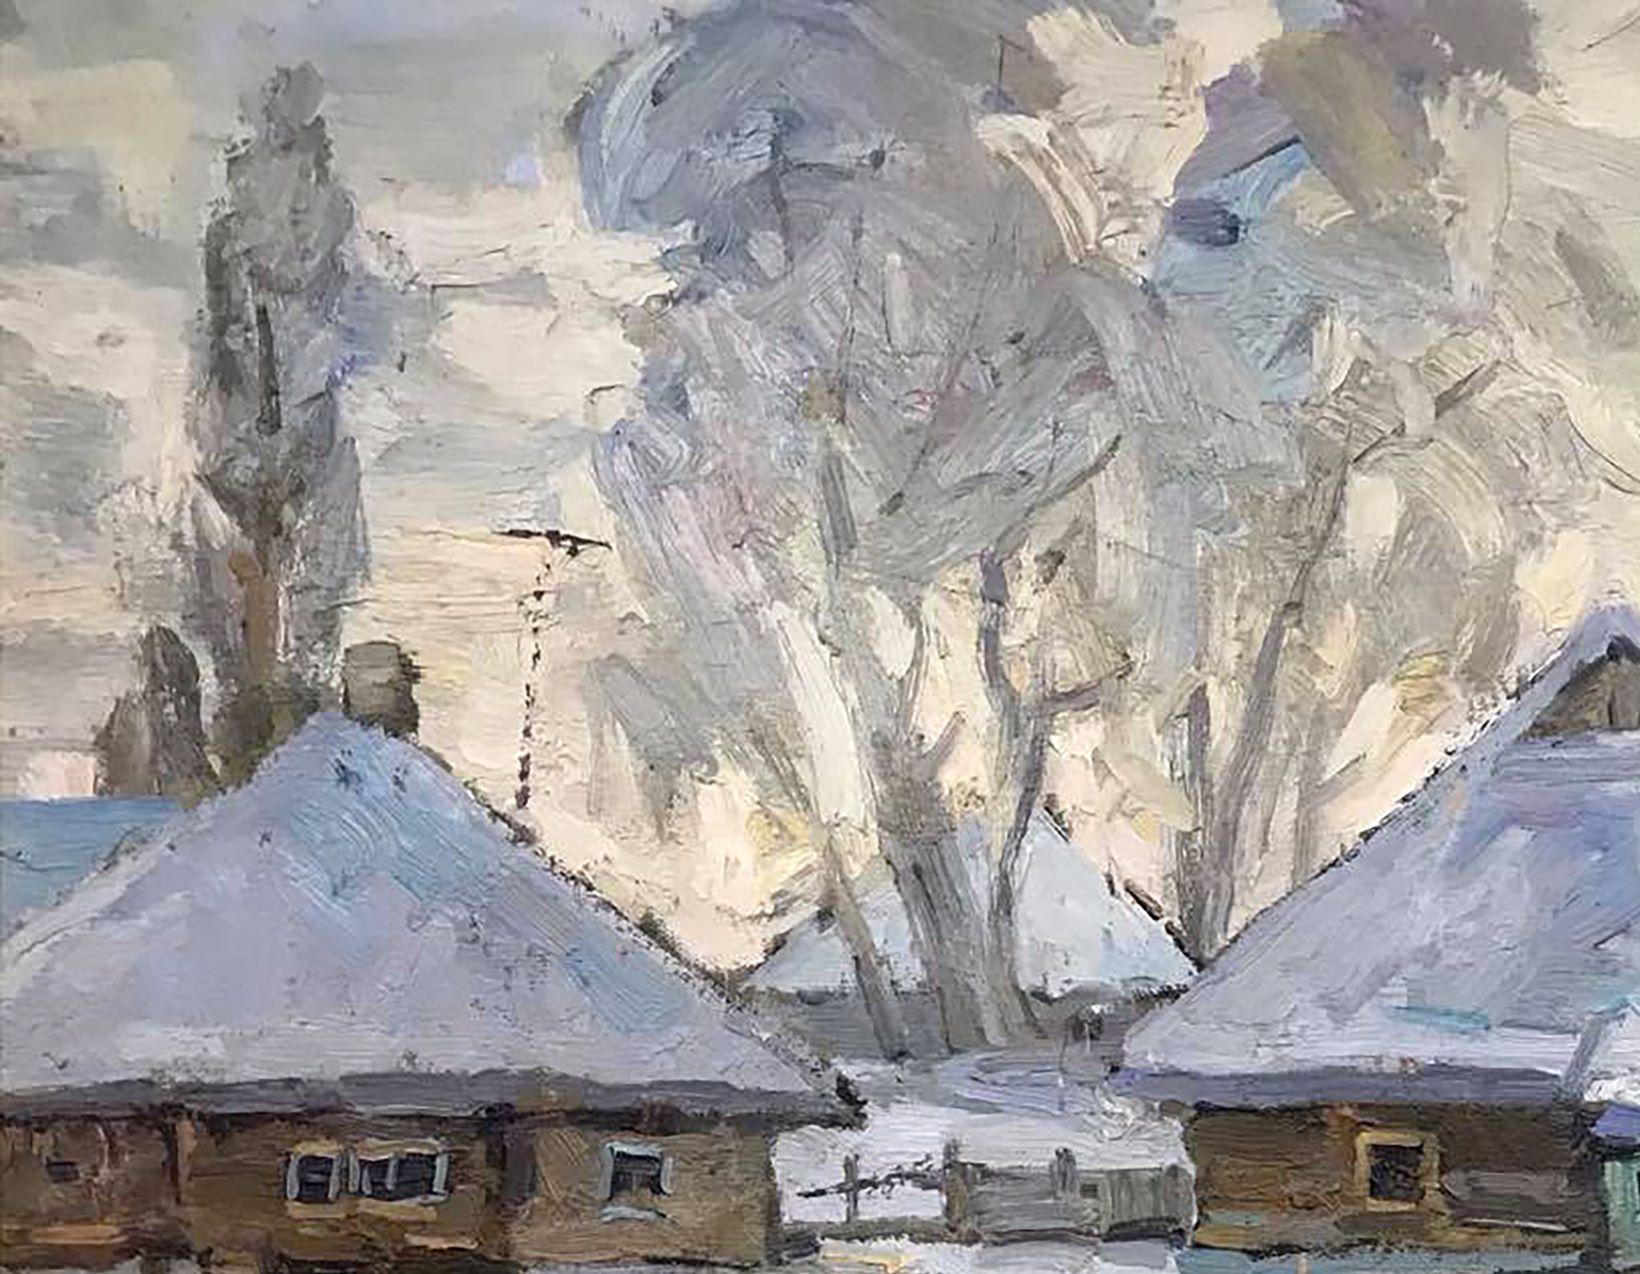 Artist: Alex Kalenyuk 
Work: Original oil painting, handmade artwork, one of a kind 
Medium: Oil on canvas 
Year: 2009
Style: Impressionism
Title: Winter Evening Landscape
Size: 27.5